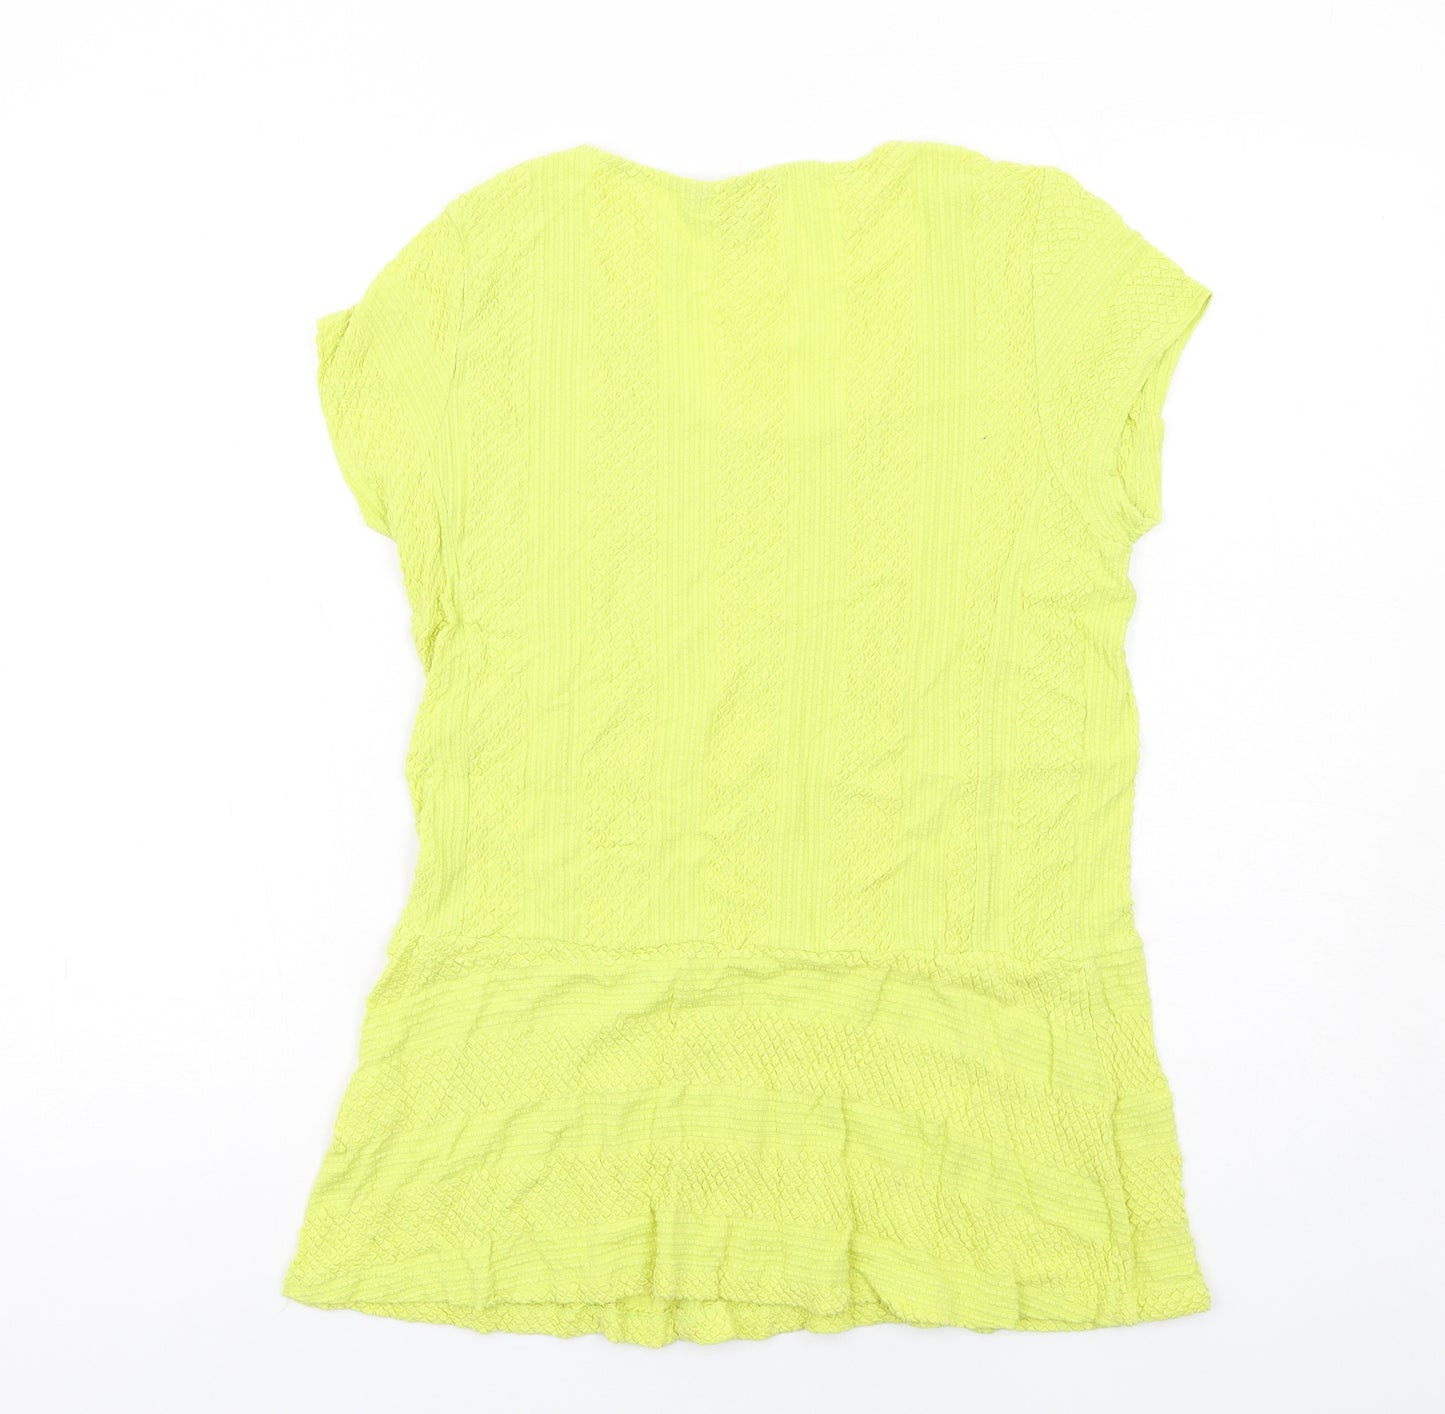 Suzanne Grae Womens Yellow Viscose Basic T-Shirt Size M Round Neck - Textured